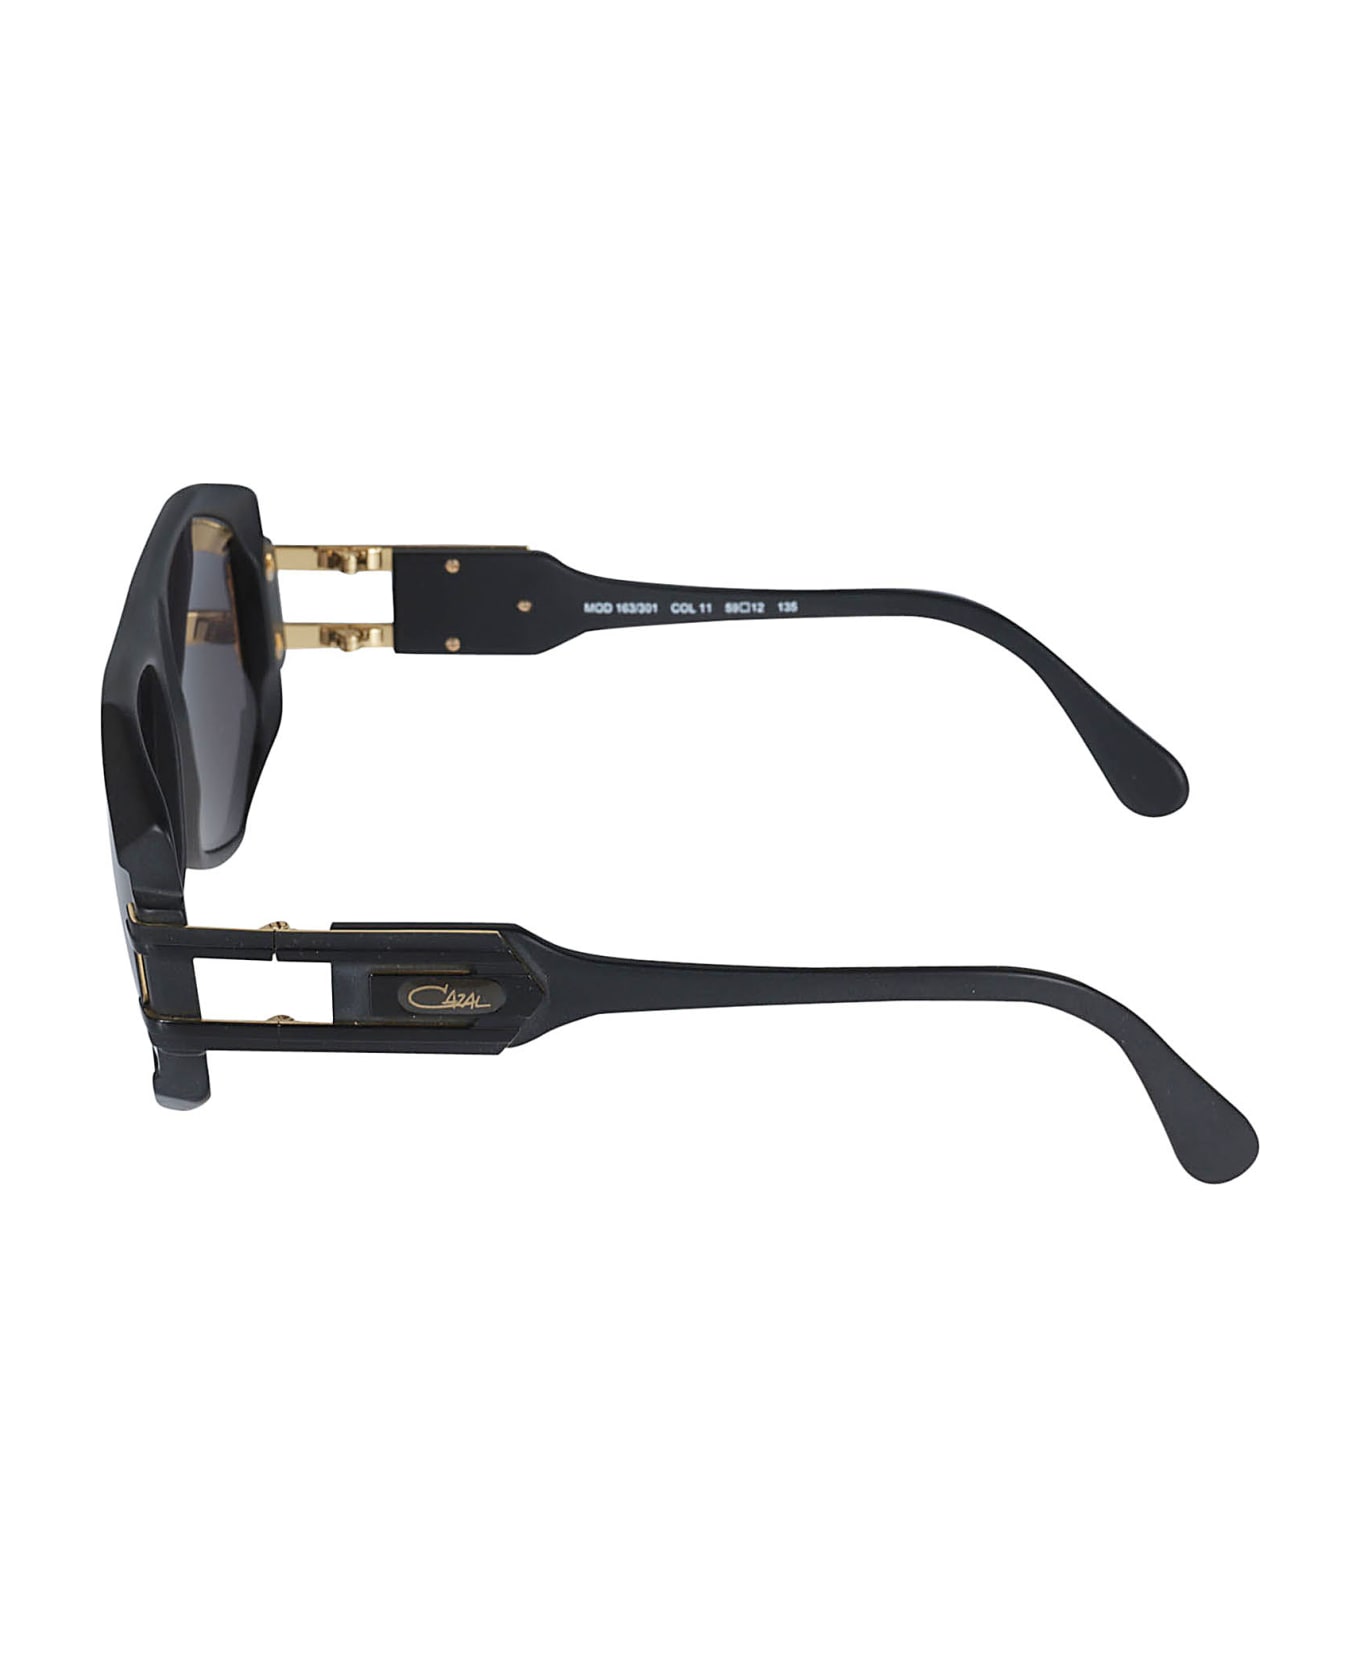 Cazal Wayfarer Sunglasses - col  011   black